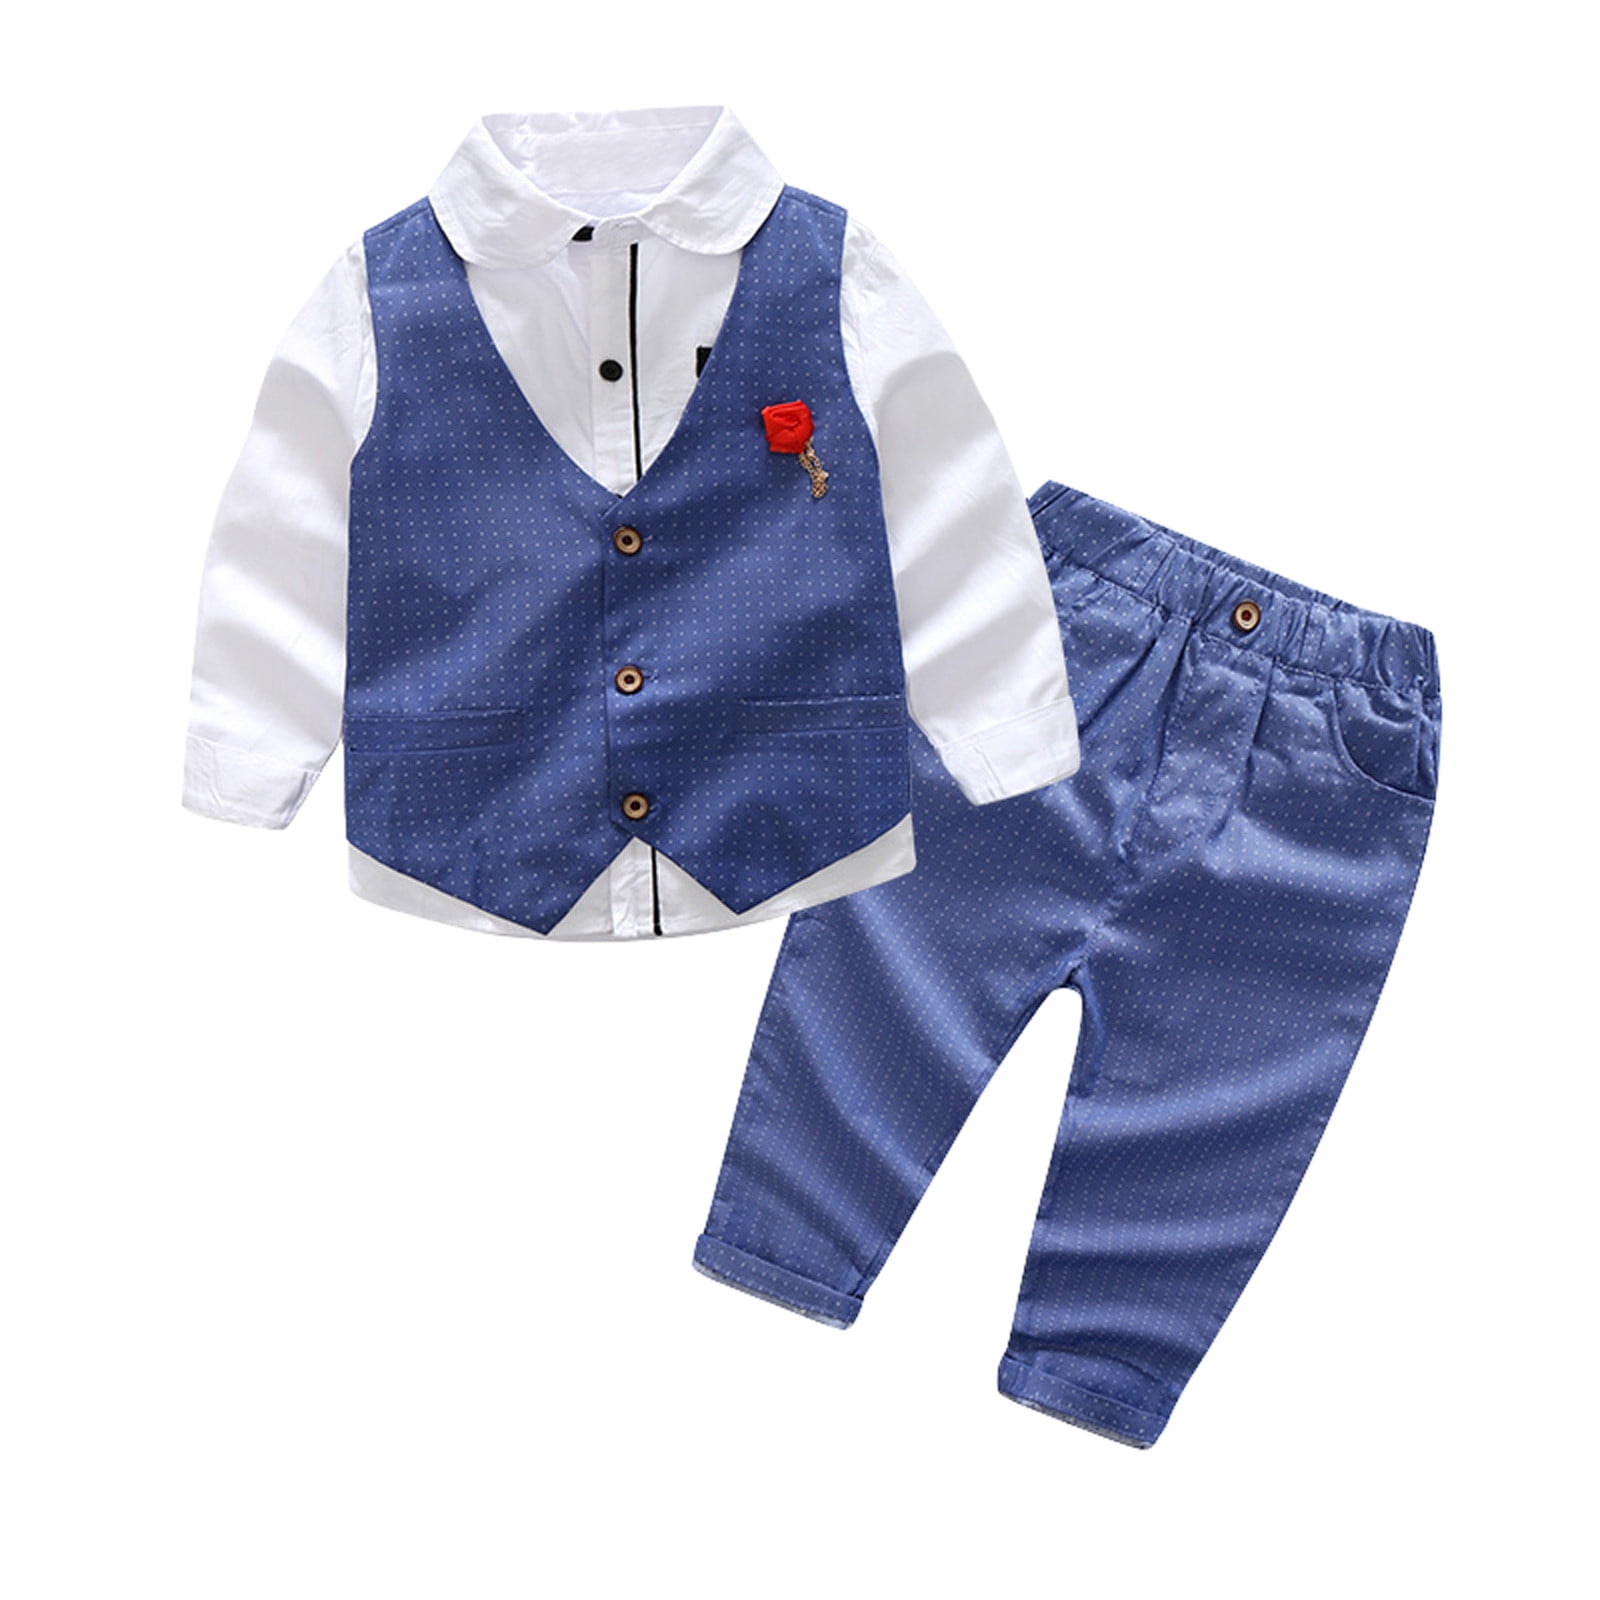 Stylish generic Baby boy Suit Shirt with Denim Upper Jacket : Amazon.in:  Fashion